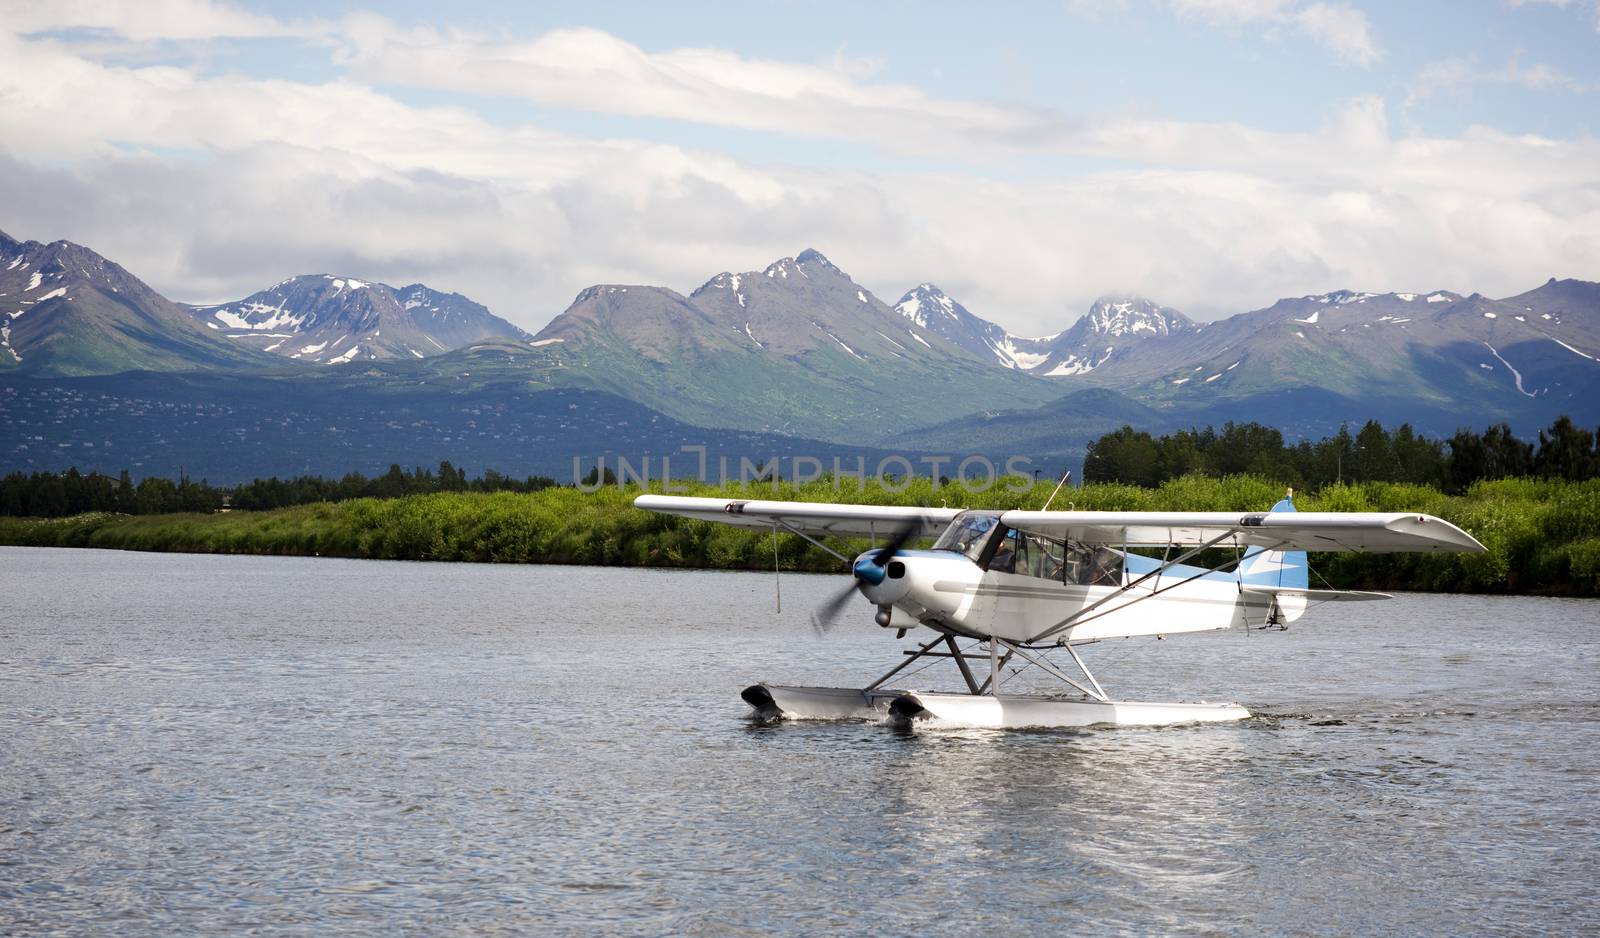 Single Prop Airplane Pontoon PLane Water Landing Alaska Last Frontier by ChrisBoswell